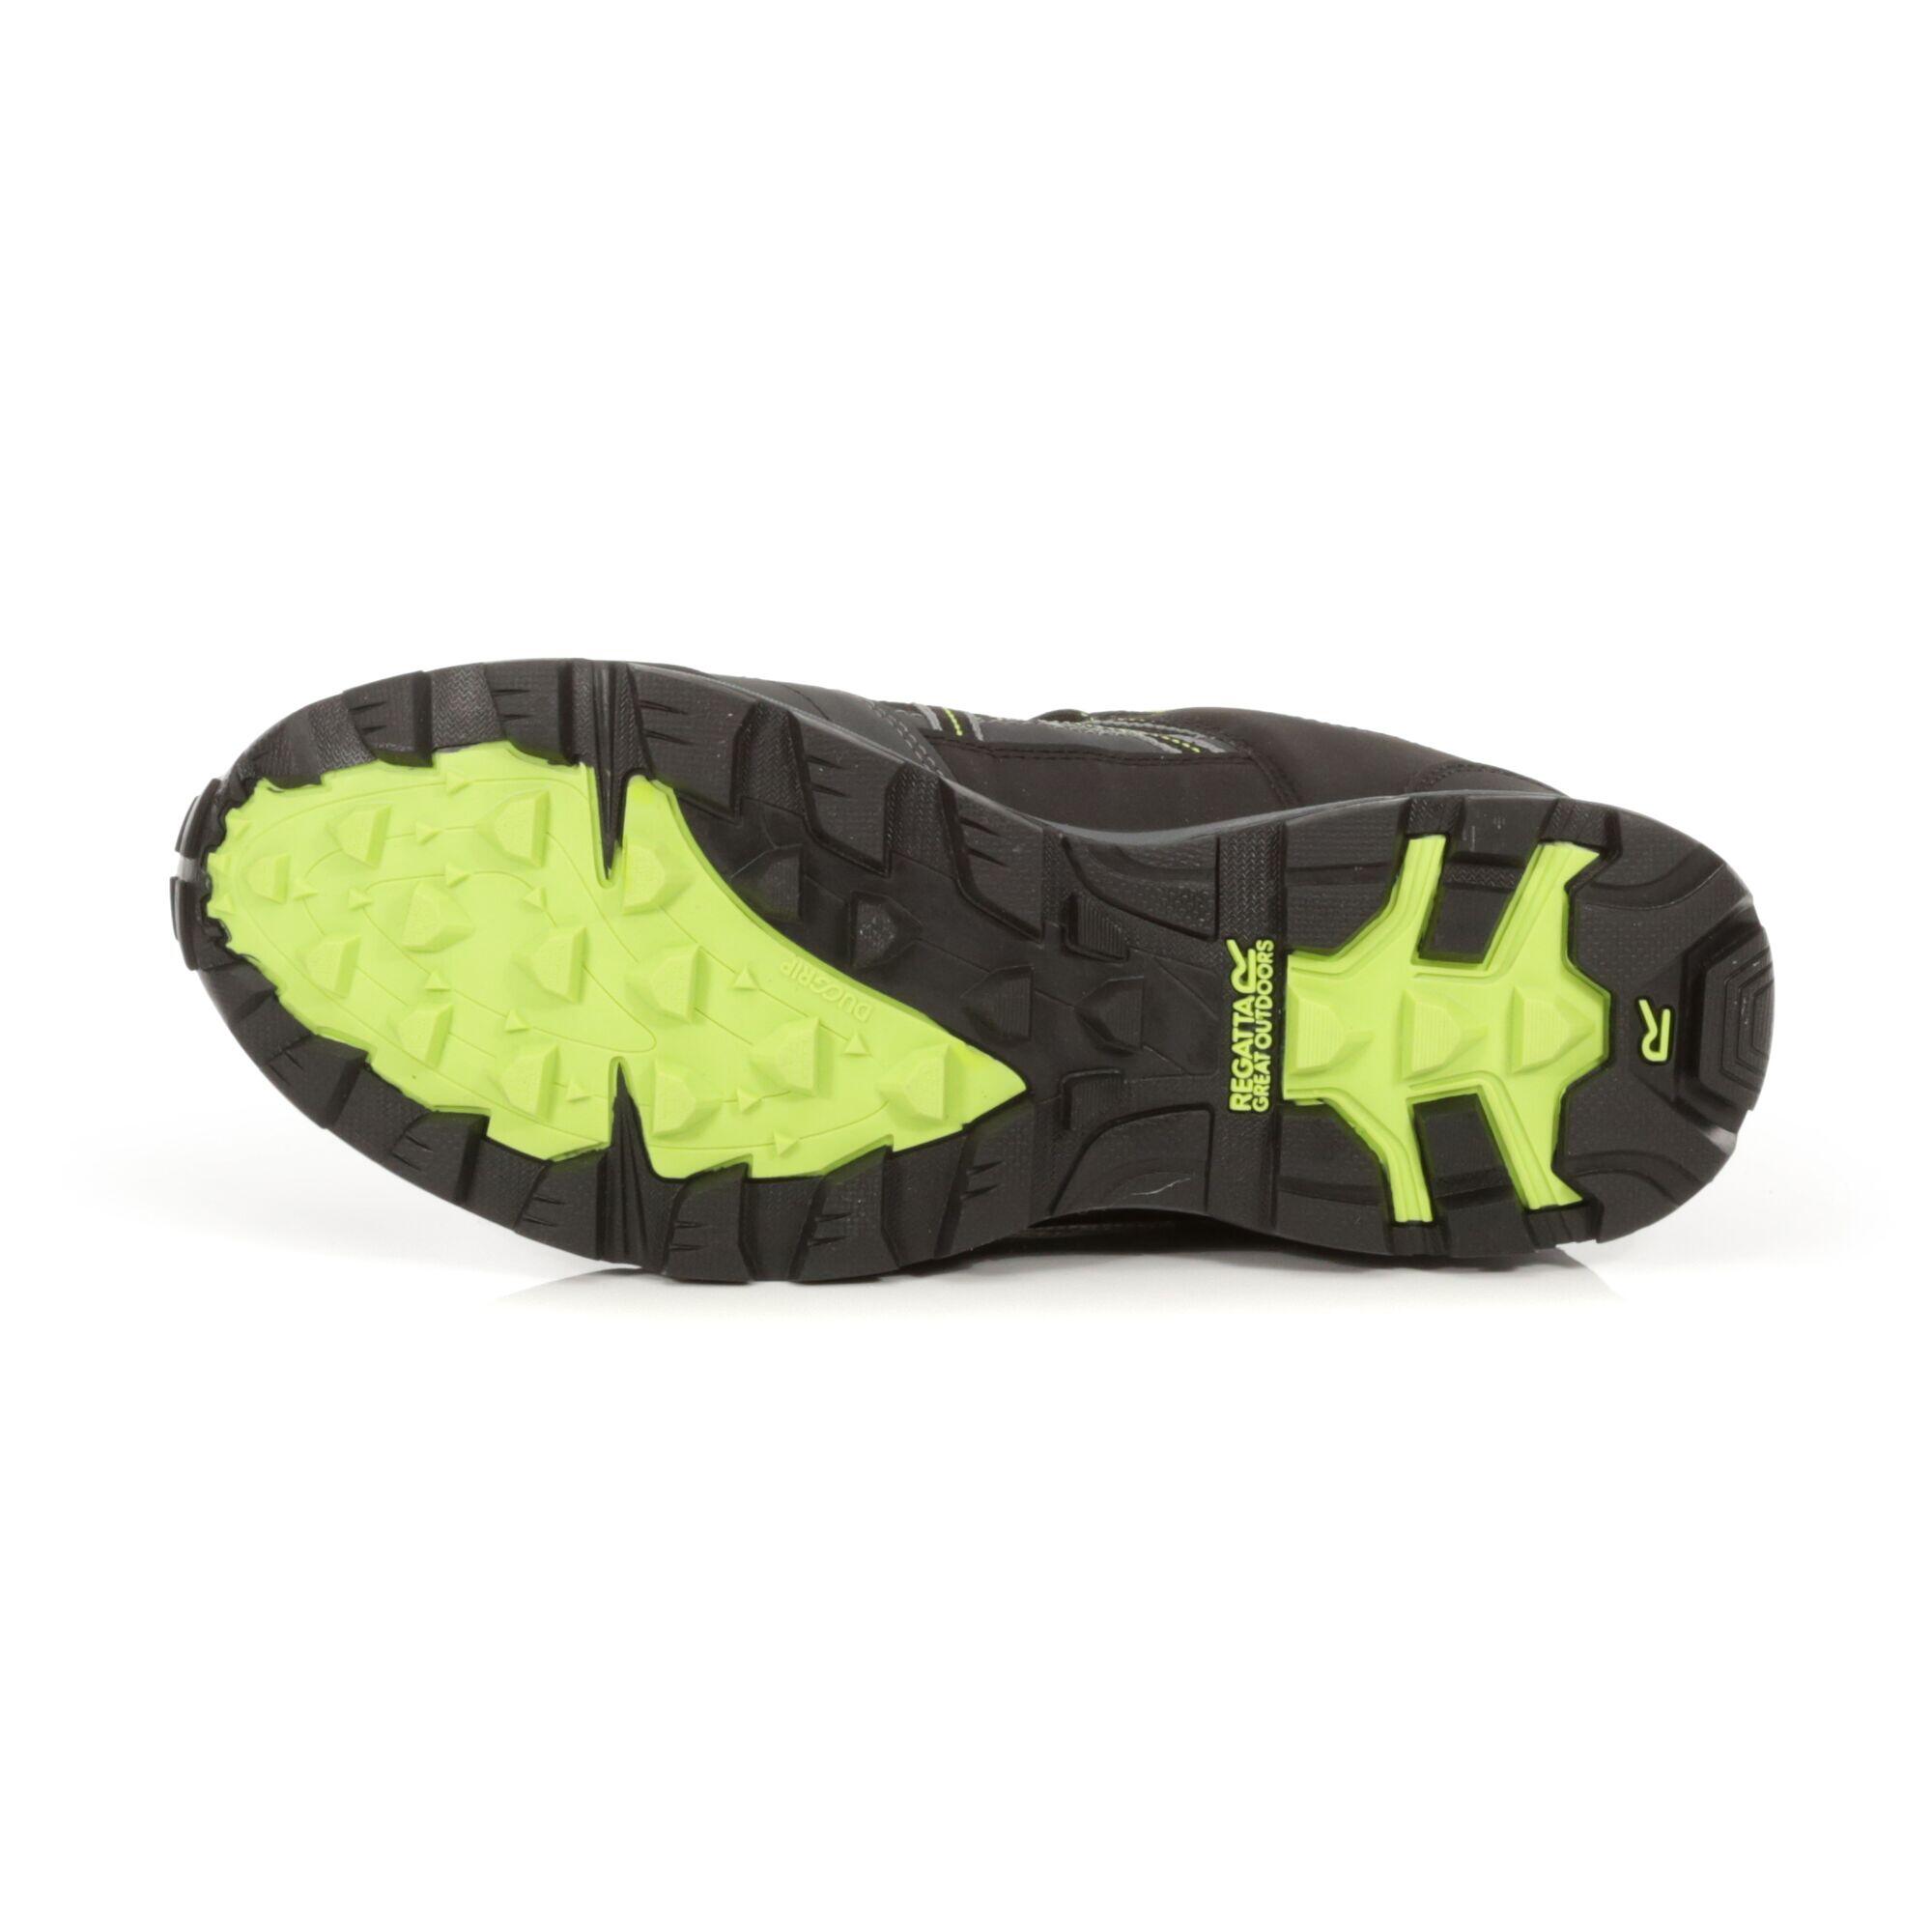 Samaris II Men's Hiking Shoes - Black/Light Green 2/3